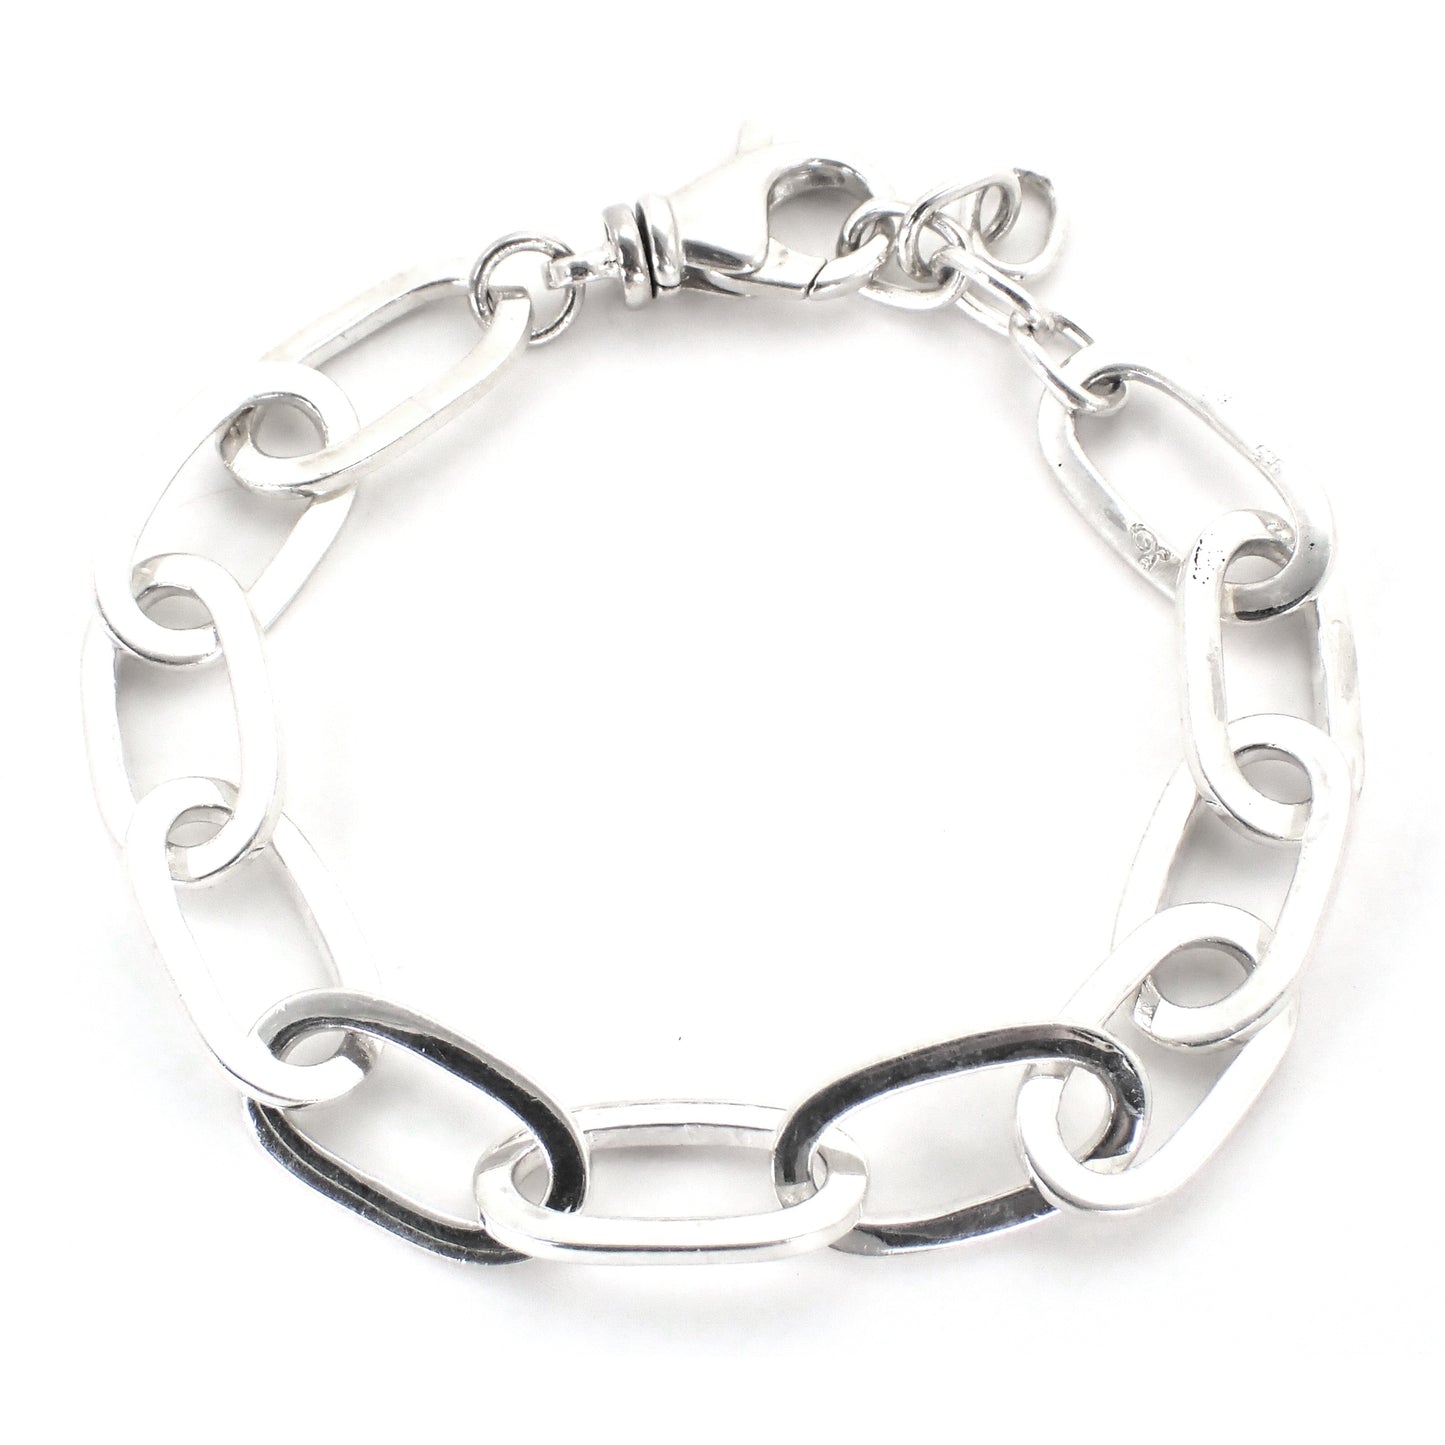 Silver high polish link bracelet.